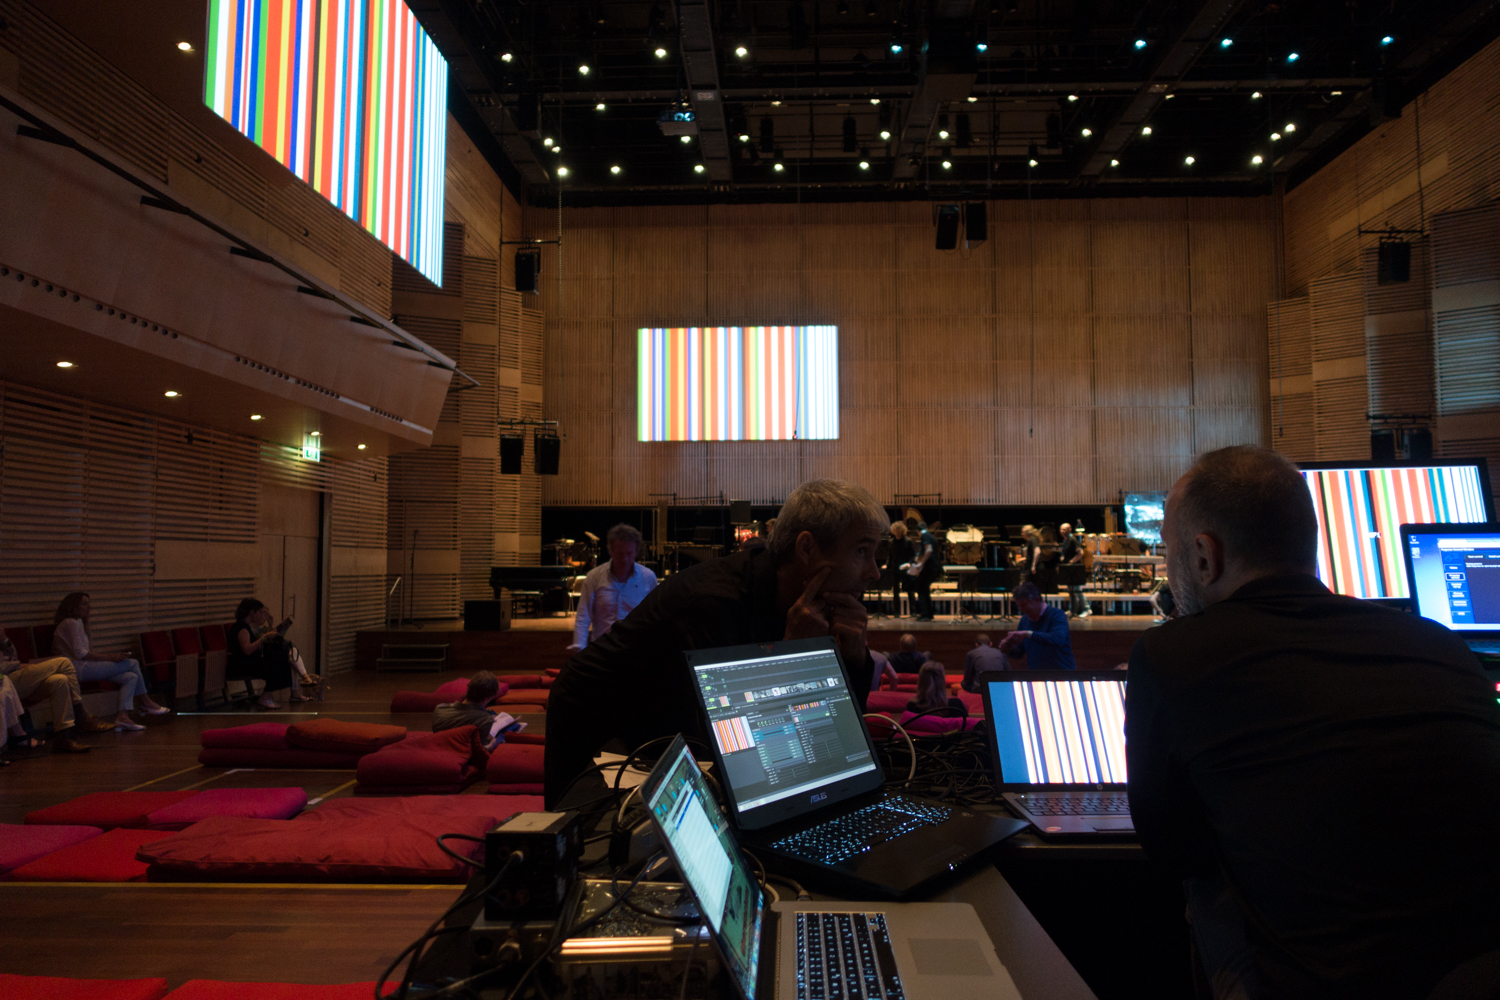    Rem Koolhaas's barcode EU flag decorates the inside the Muziekgebouw's main hall during Urbo Kune.&nbsp;   Photo by Canan Marasligil  